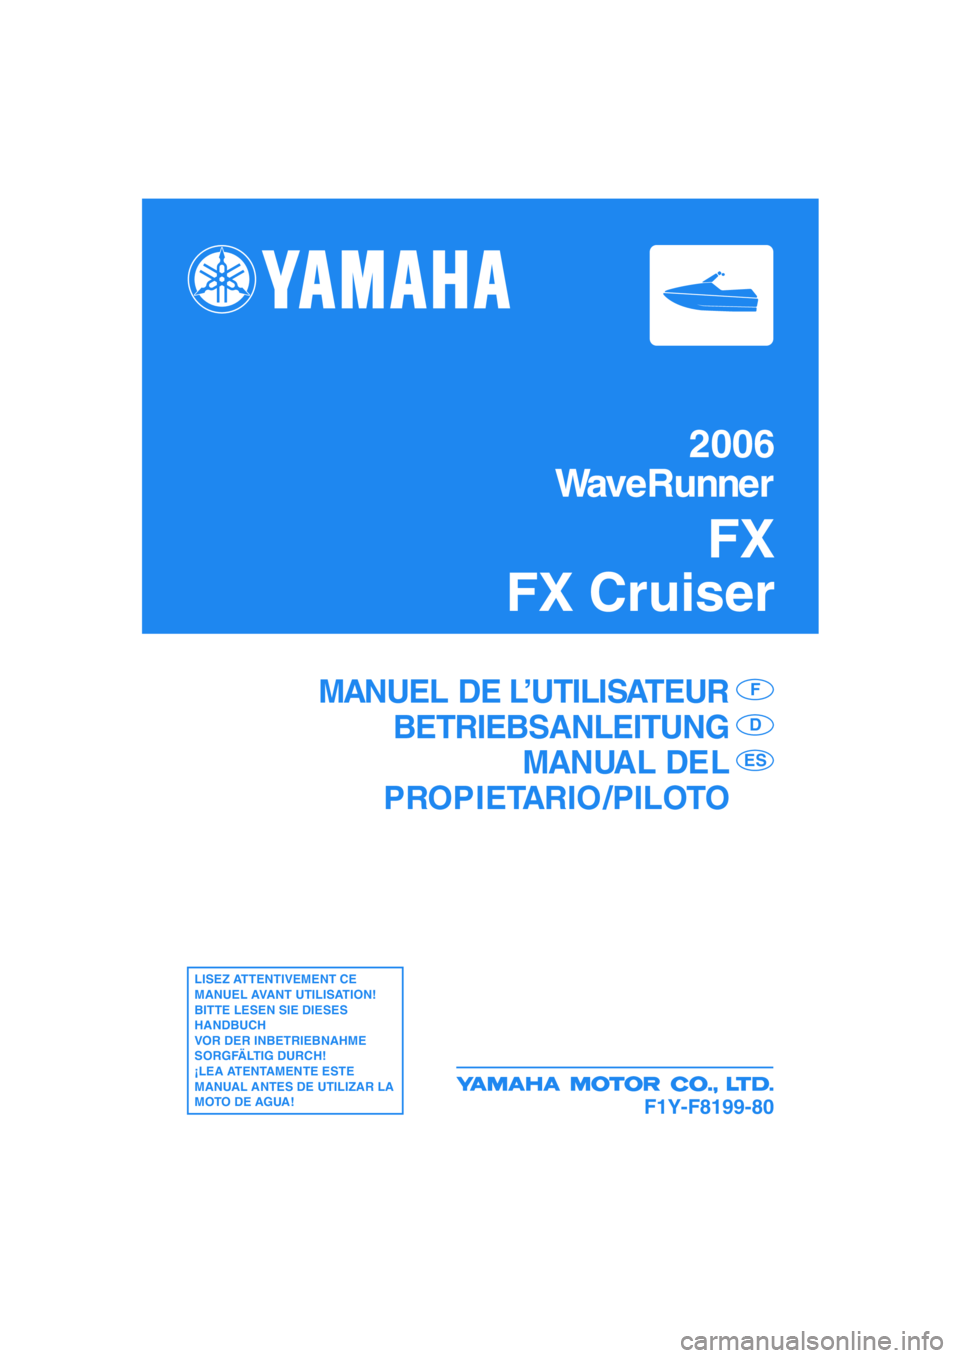 YAMAHA FX CRUISER 2006  Notices Demploi (in French) 2006
WaveRunner
FX
FX Cruiser
F1Y-F8199-80
MANUEL DE L’UTILISATEUR
BETRIEBSANLEITUNG
MANUAL DEL
PROPIETARIO /PILOTOF
D
ES
LISEZ ATTENTIVEMENT CE 
MANUEL AVANT UTILISATION!
BITTE LESEN SIE DIESES 
HA